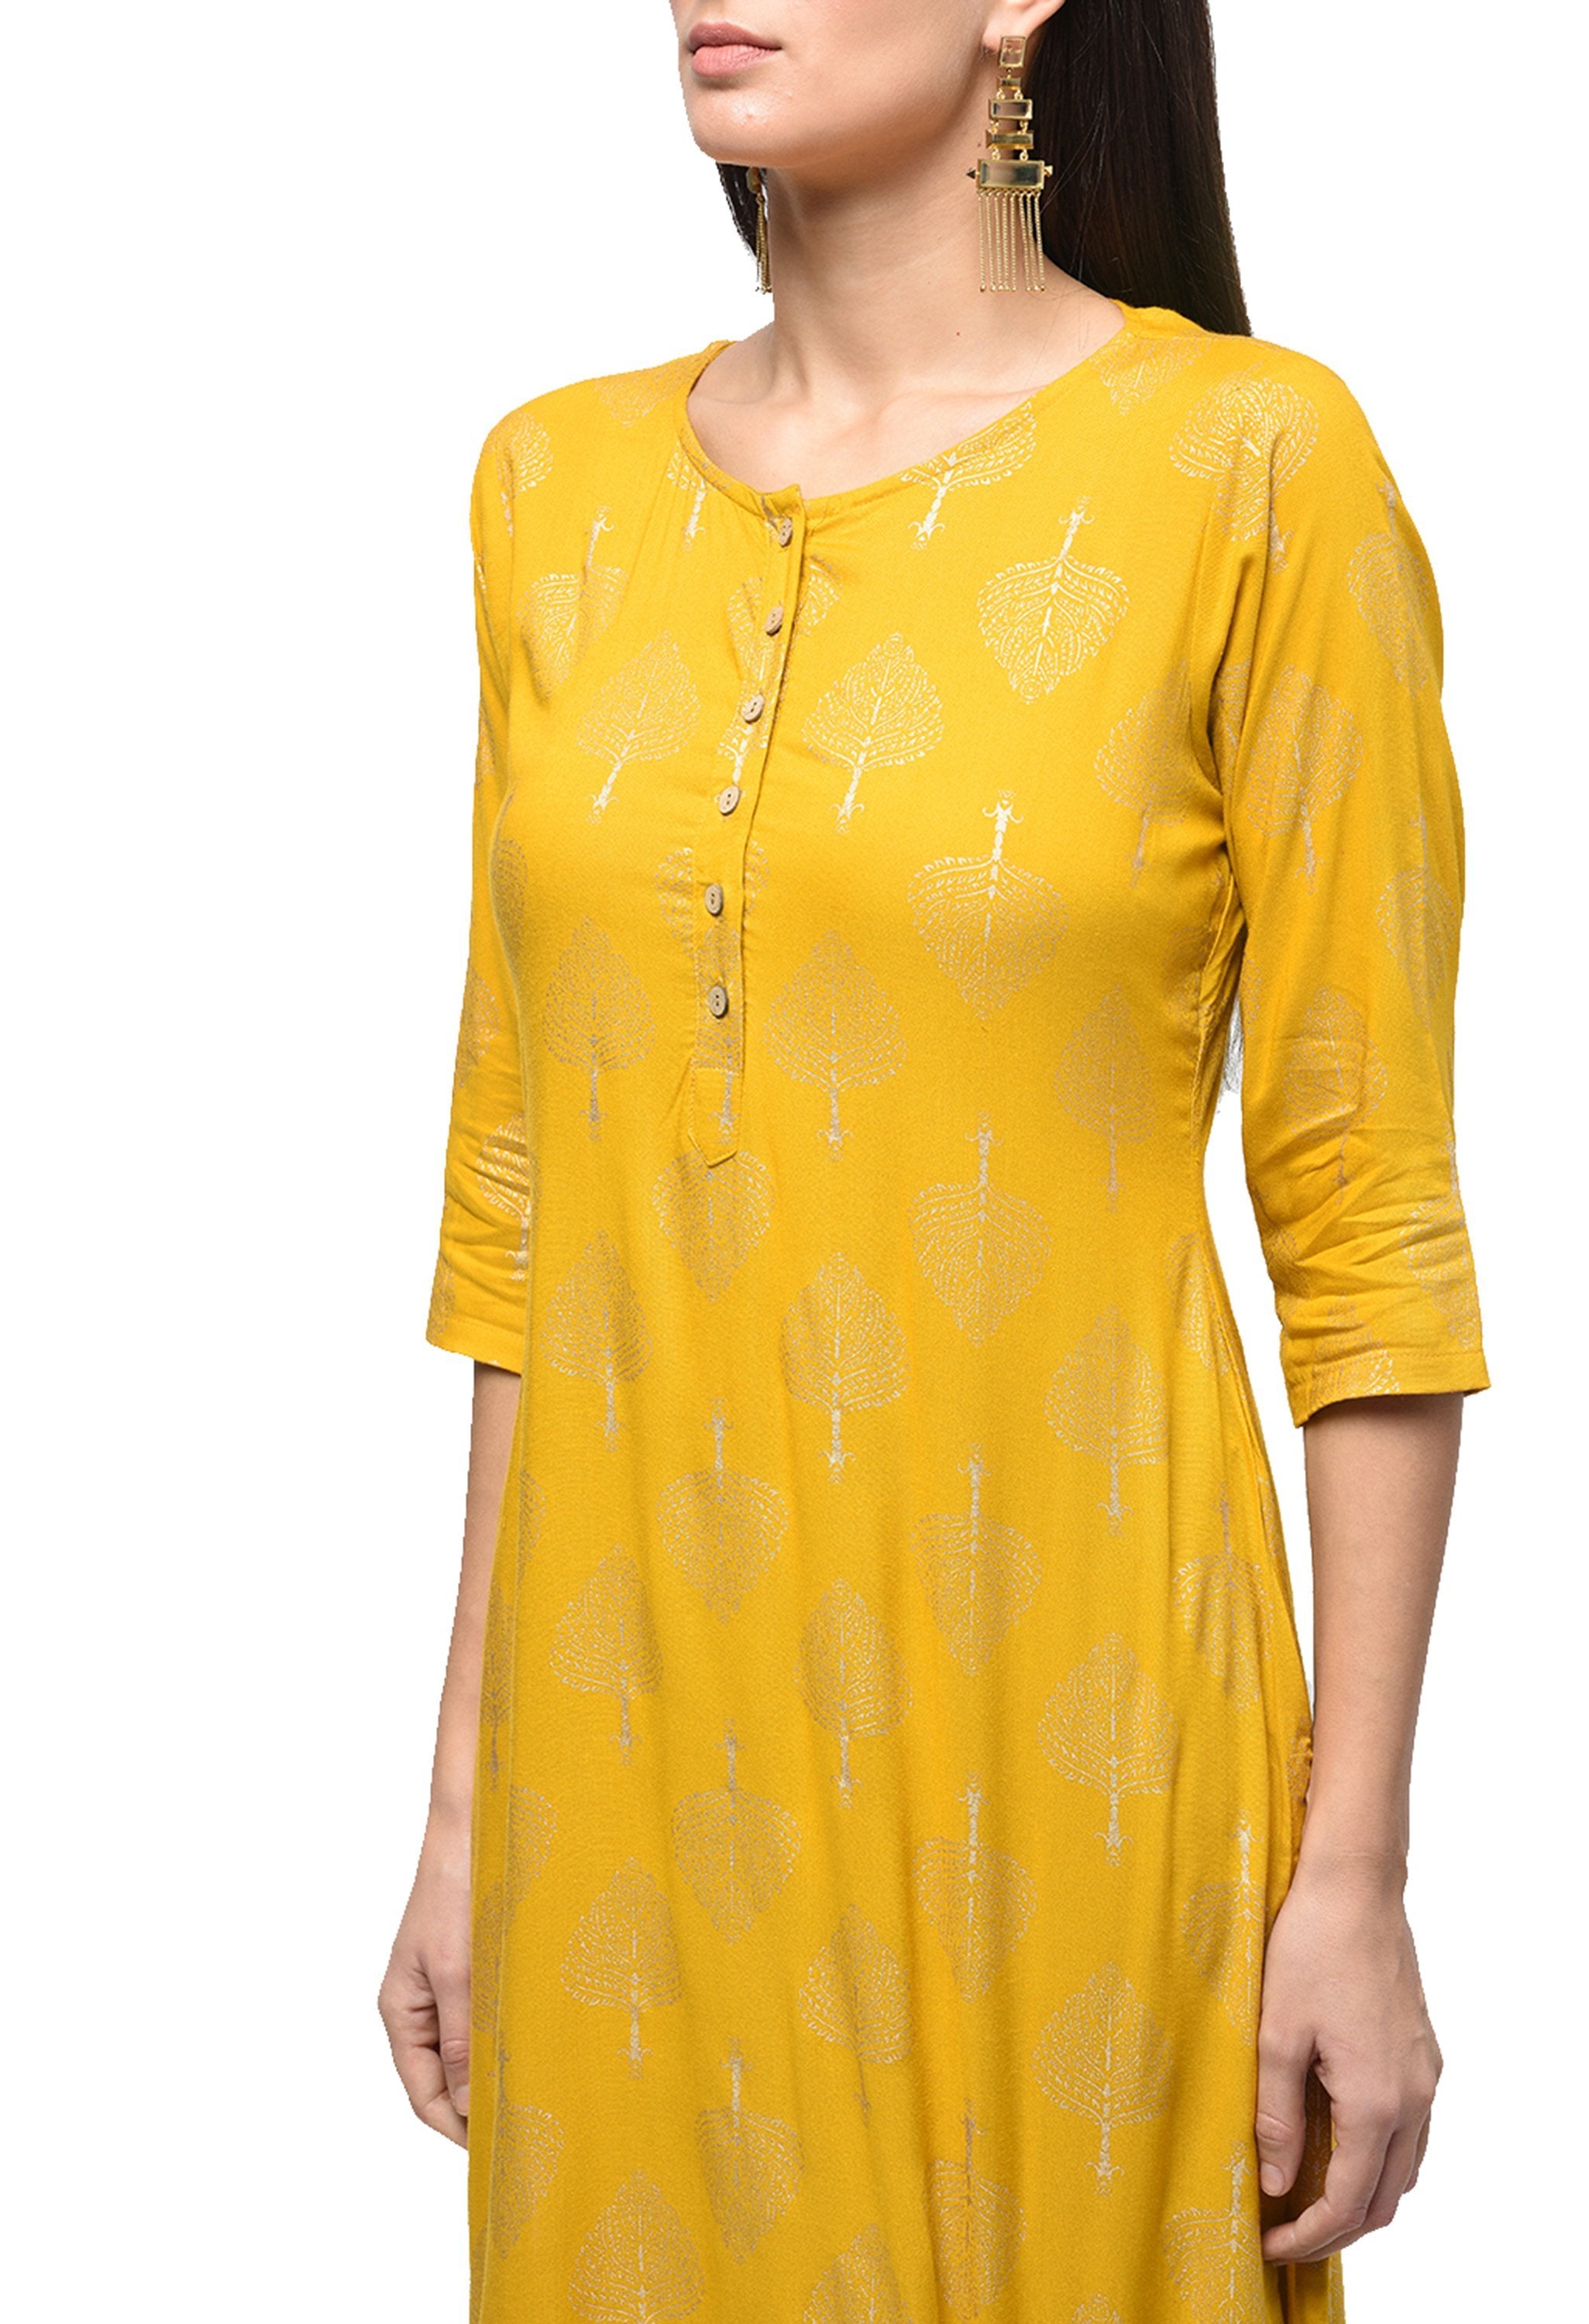 Women's Yellow Rayon Solid Half Sleeve Round Neck Casual Kurta Only - Myshka